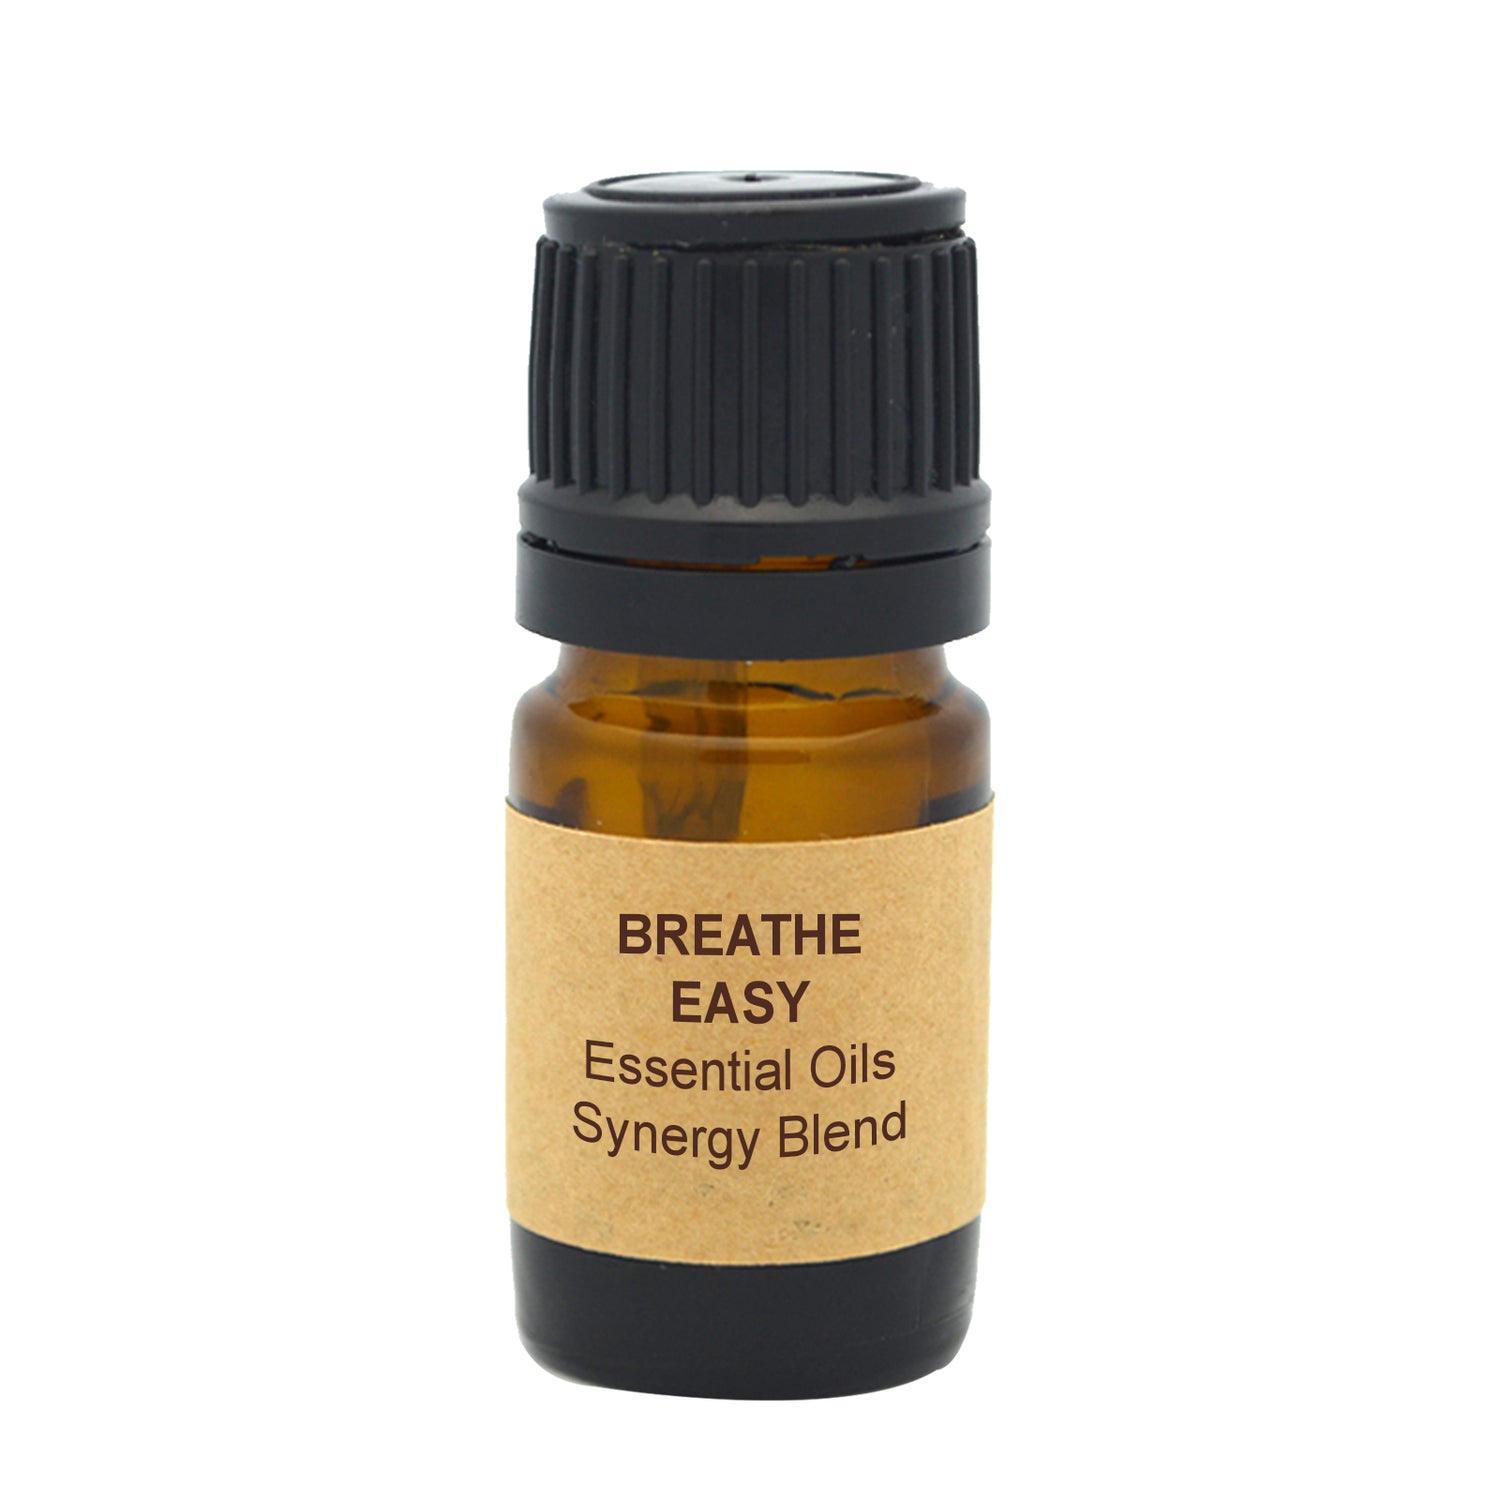 Breathe Easy Essential Oils Synergy Blend.